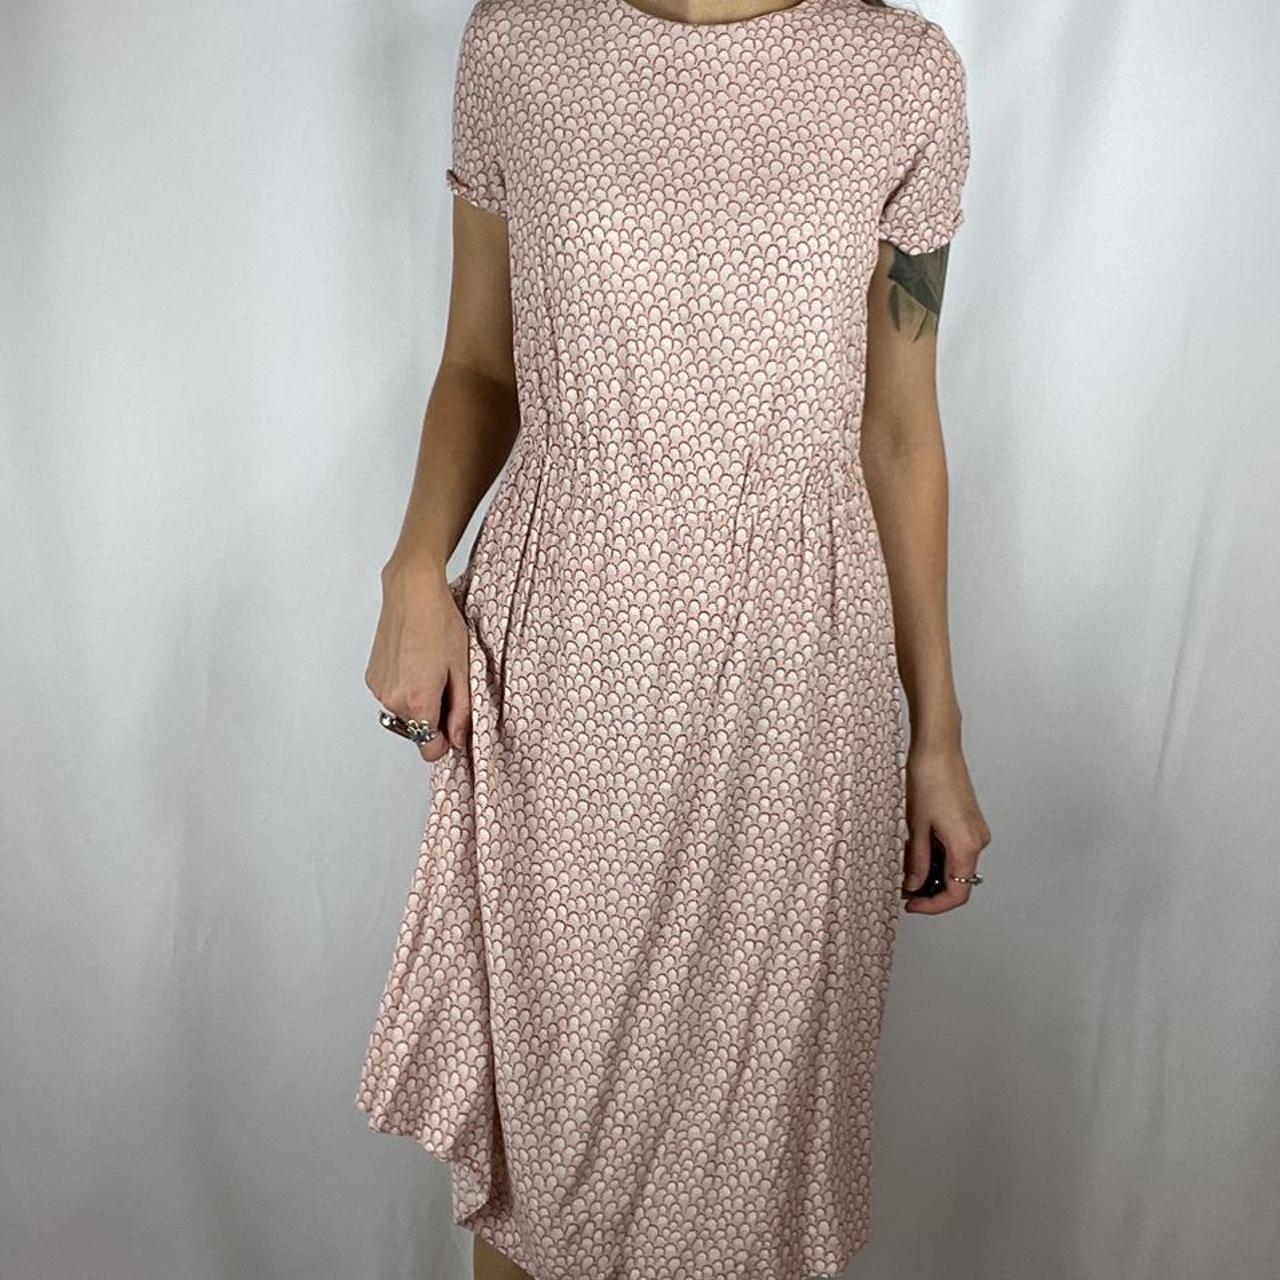 Product Image 1 - Vintage looking sheath dress 
-